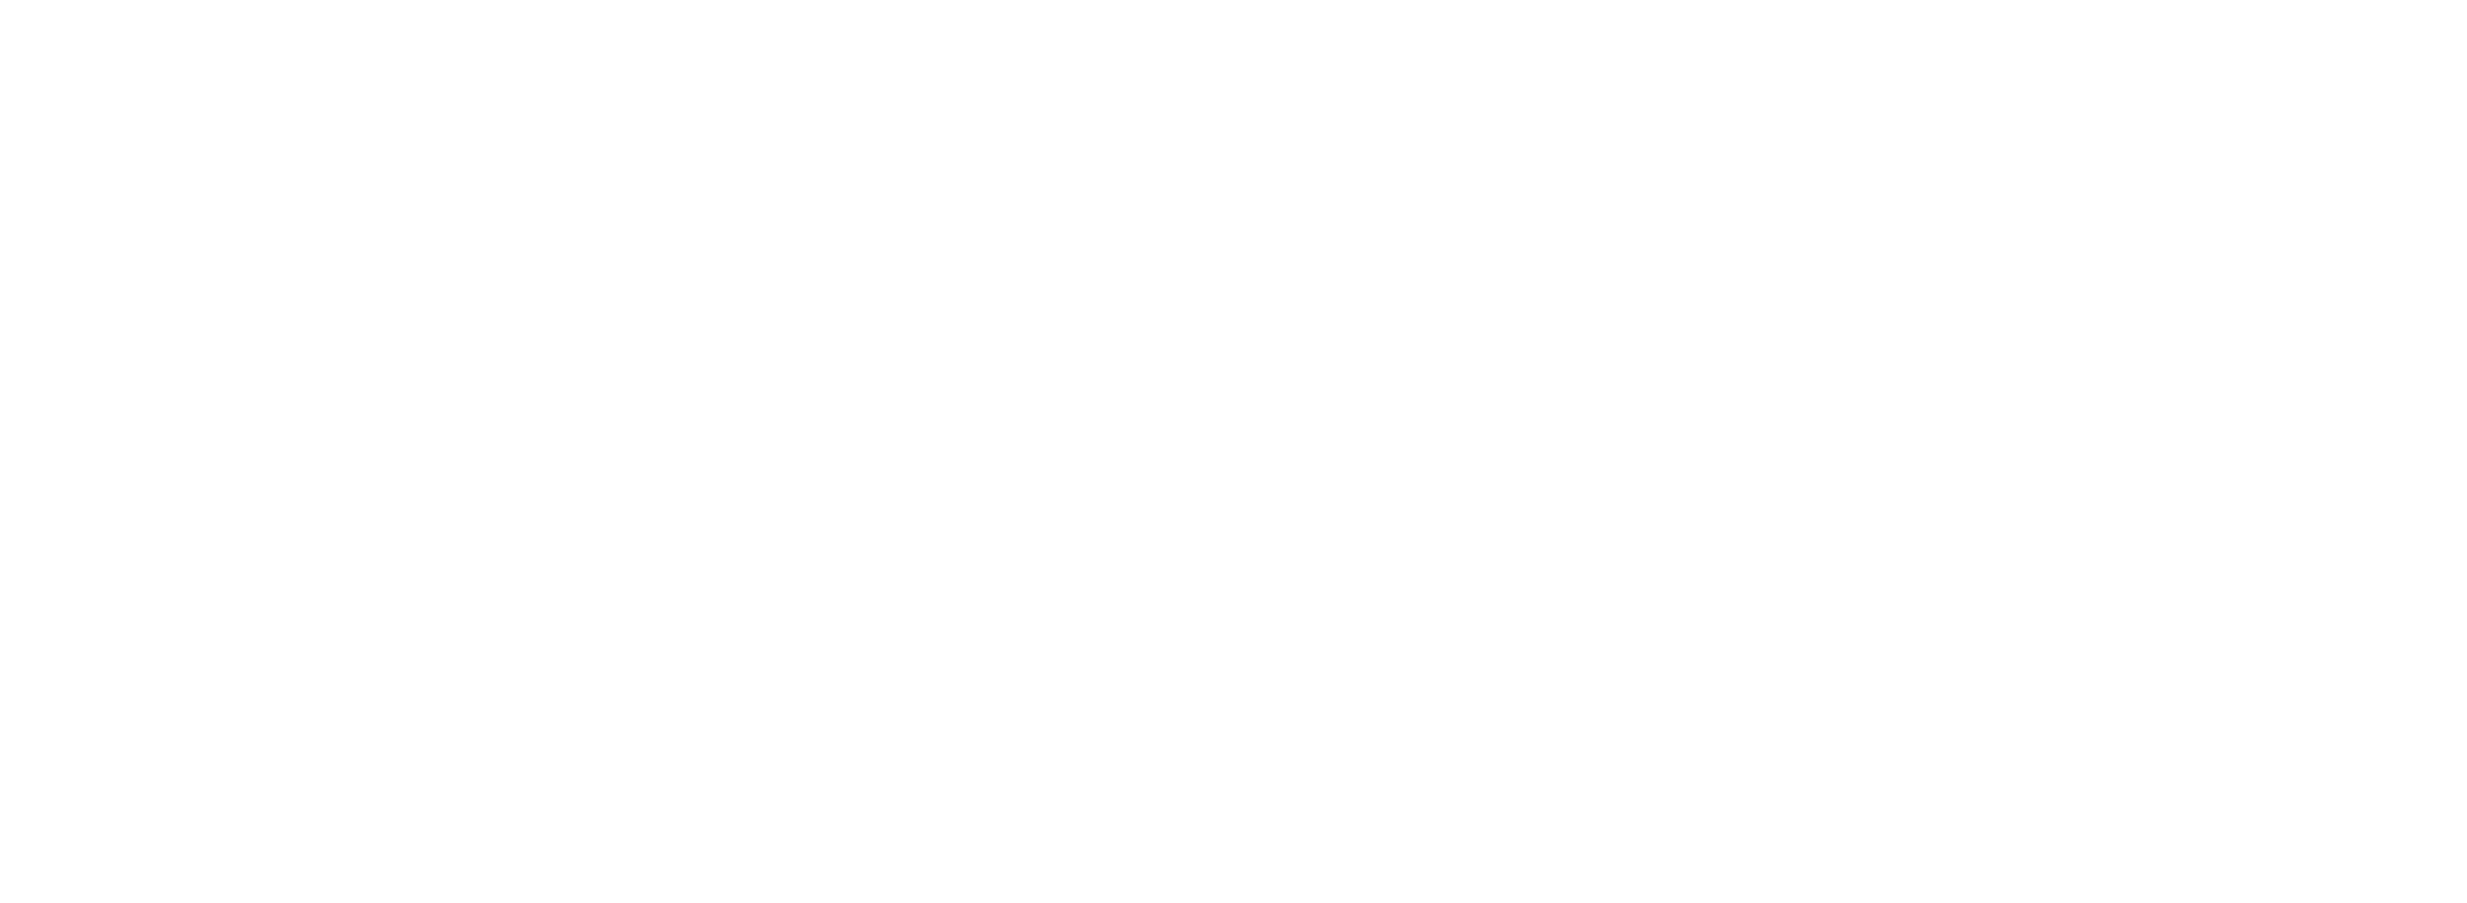 Company Logo - 4tiitoo - white